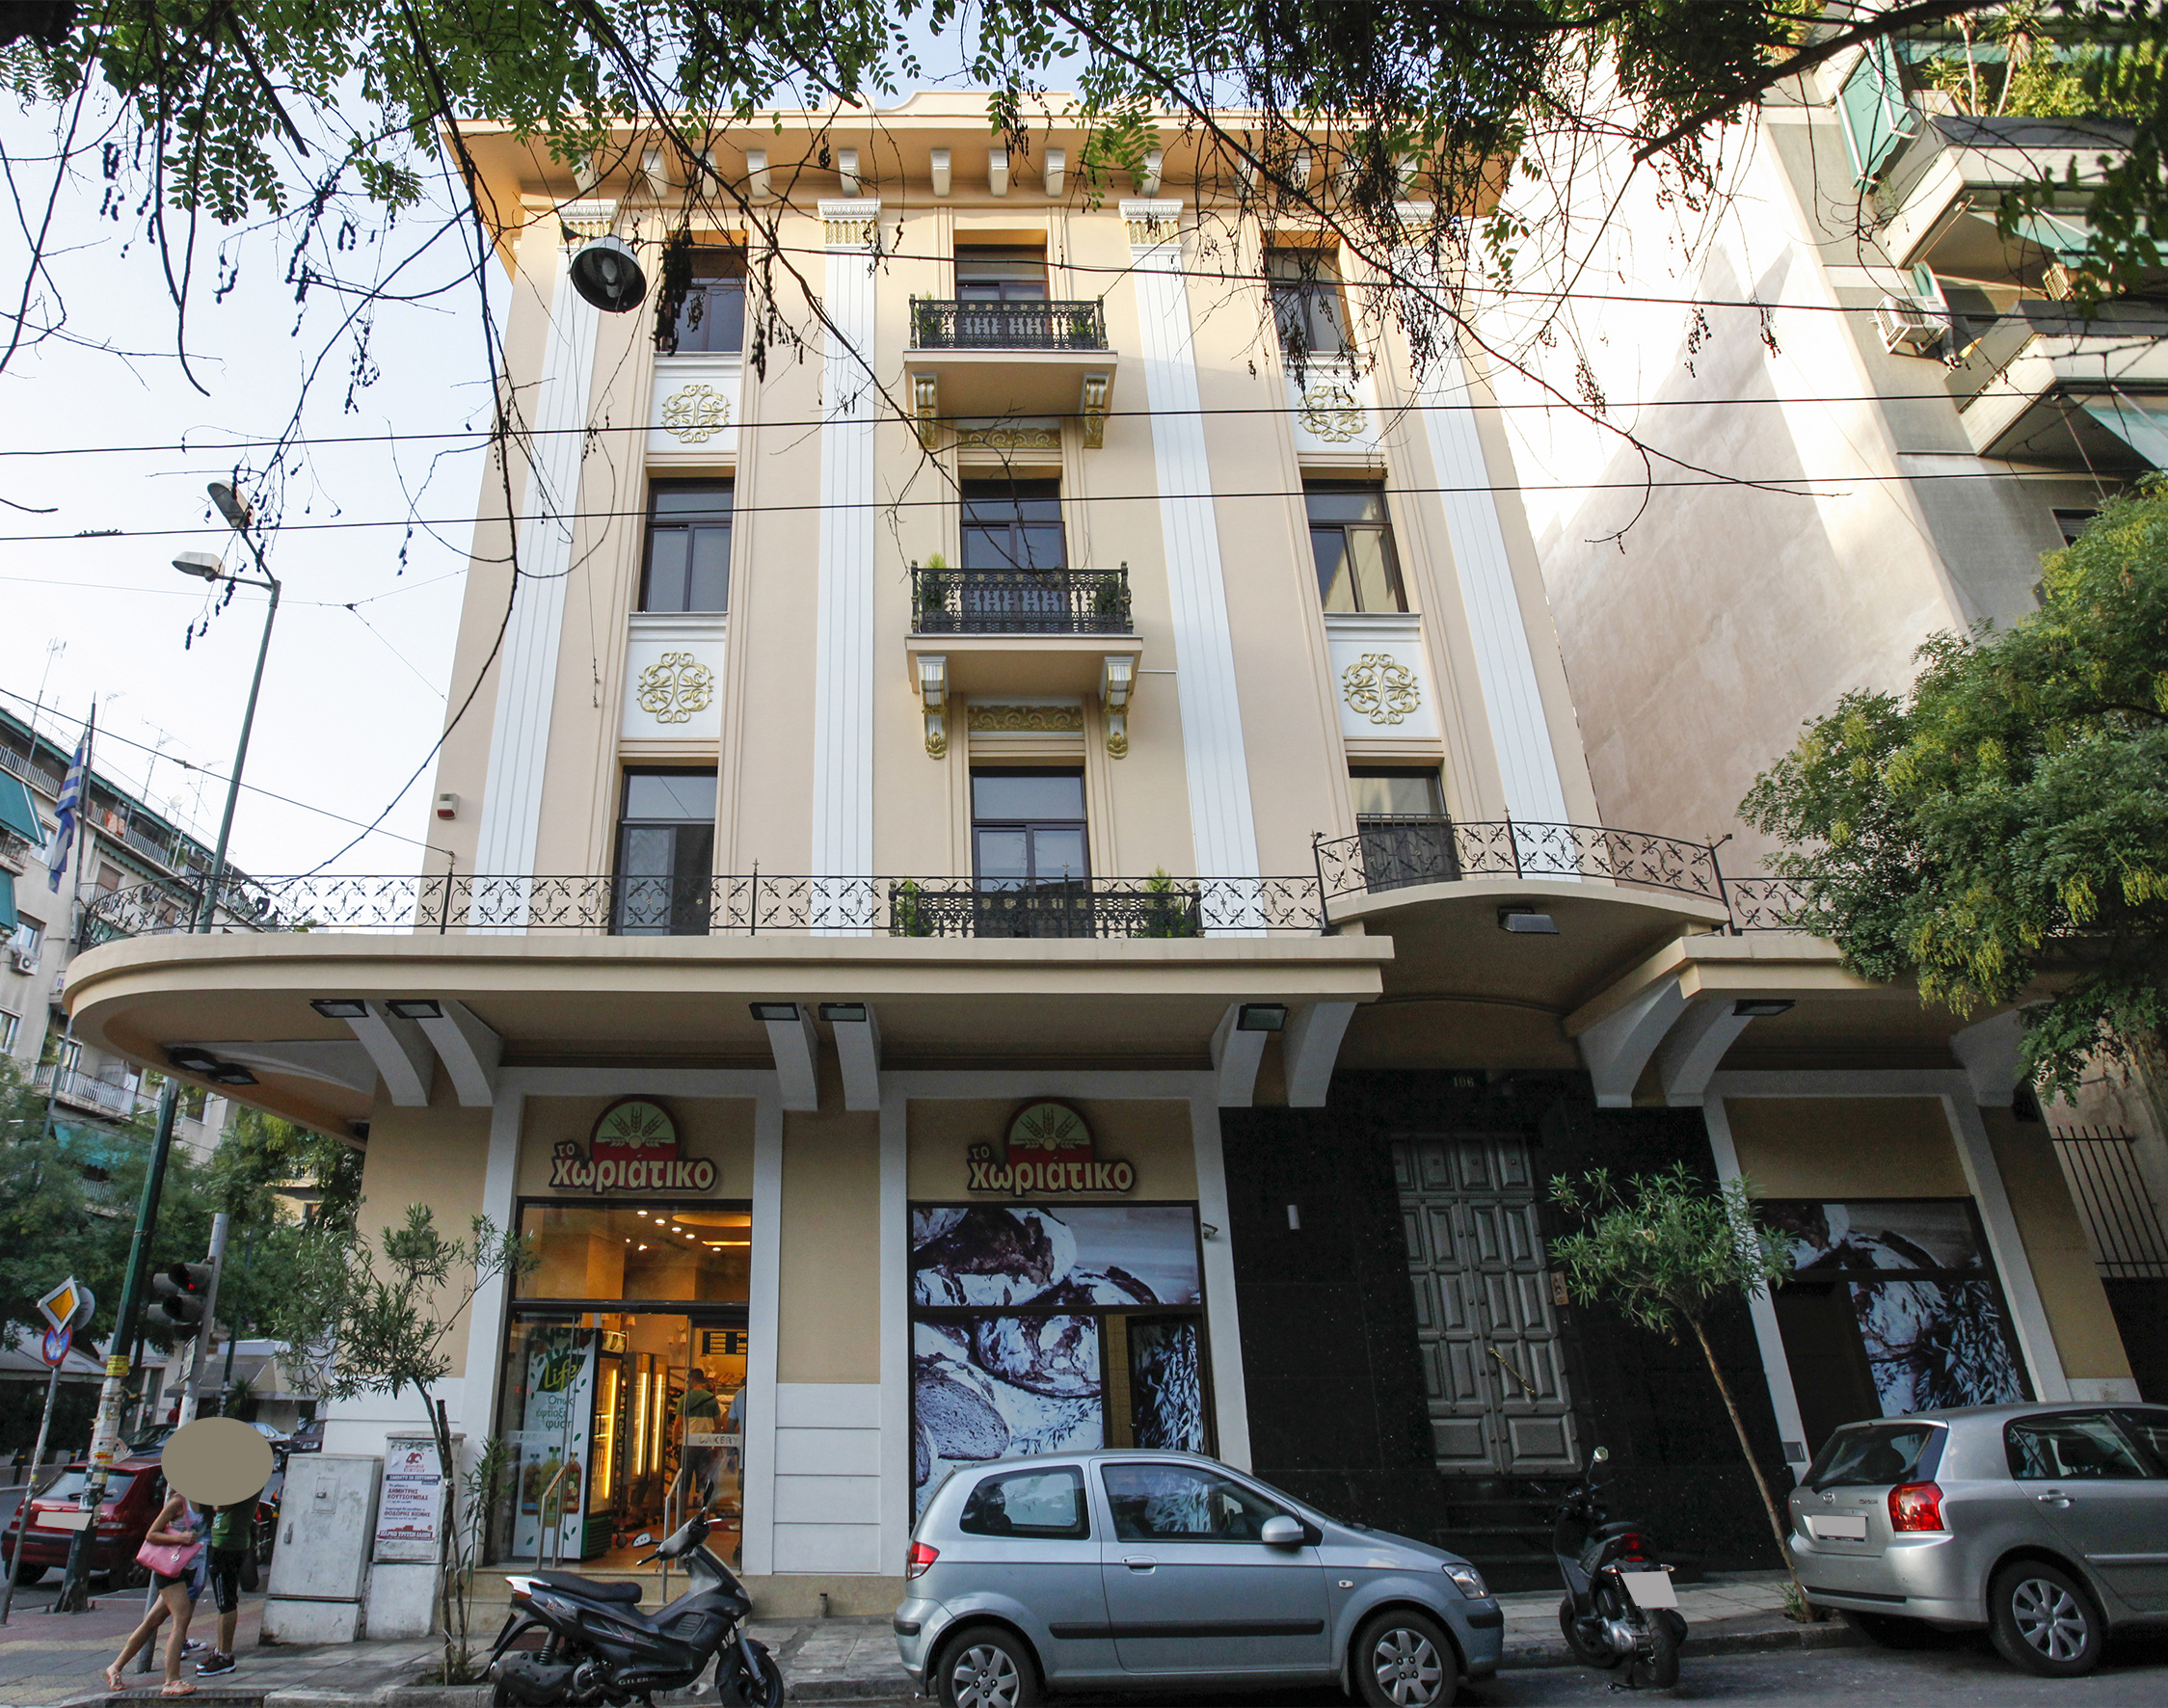 View of the façade on Ag. Meletiou street